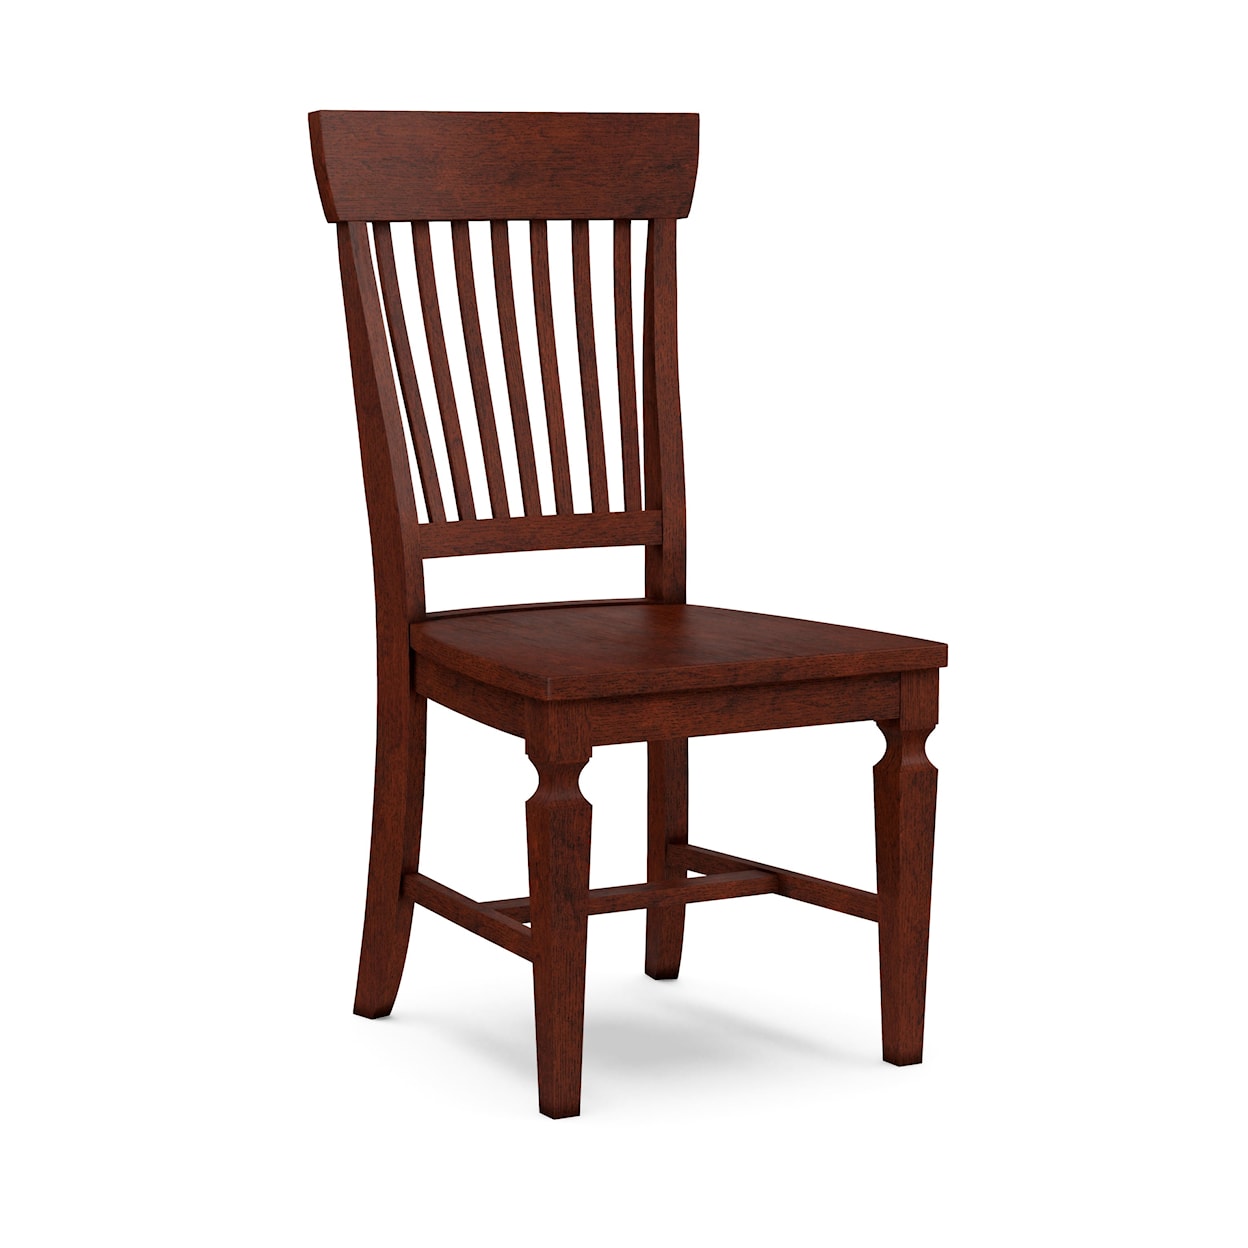 John Thomas SELECT Dining Room Vista Slatback Chair